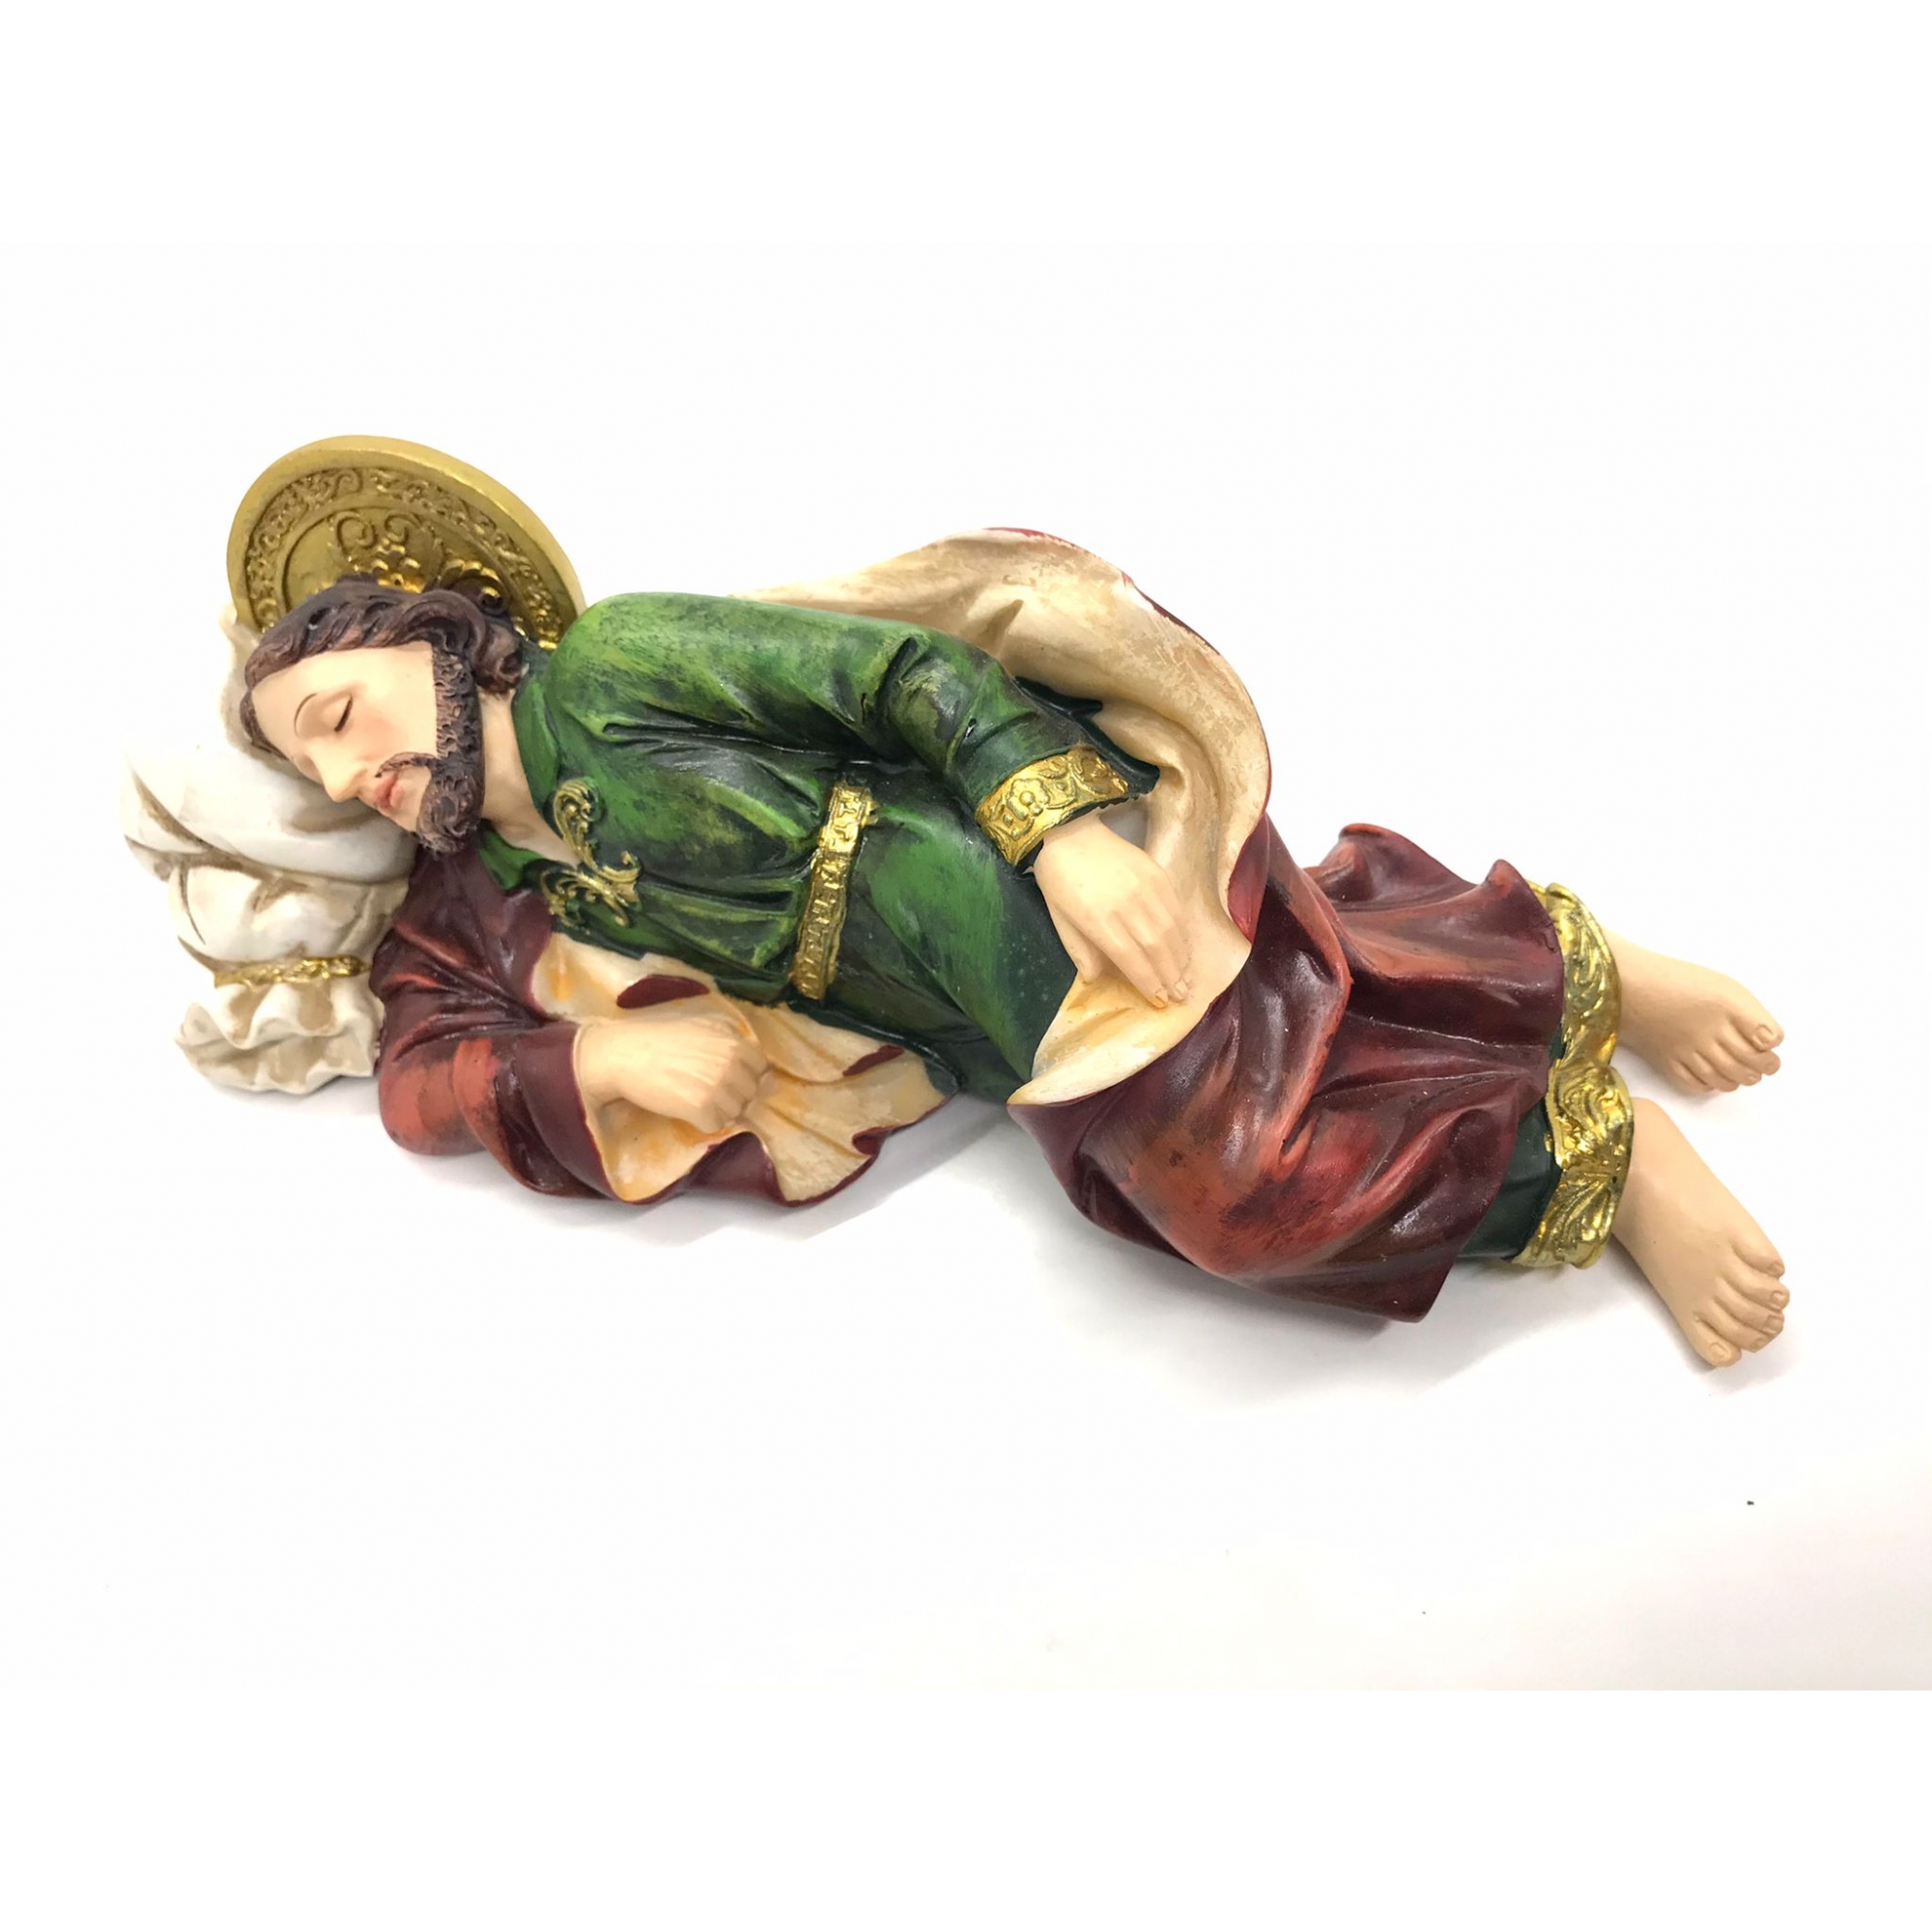 Sleeping St Joseph, 8.5" W